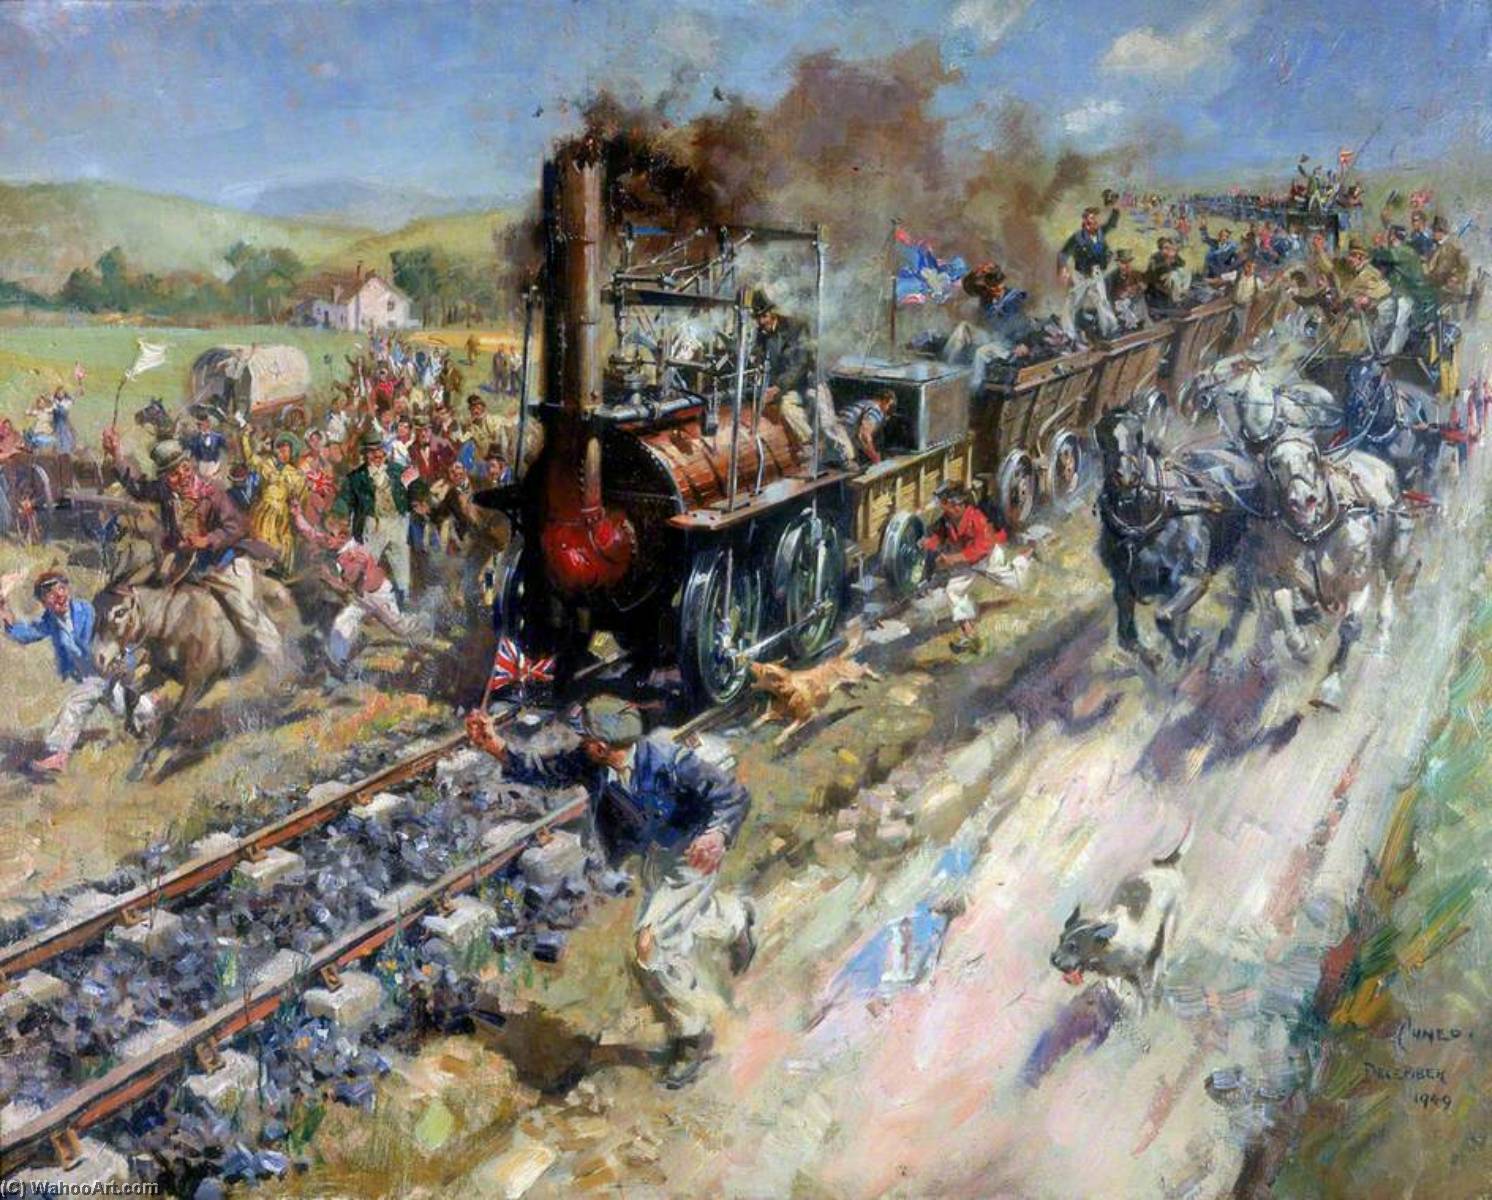 First railway. Железной дороги Стоктон-Дарлингтон. Стоктон Дарлингтон 1825. Первая железная дорога в Англии 1825. Стоктон Дарлингтонская железная дорога.